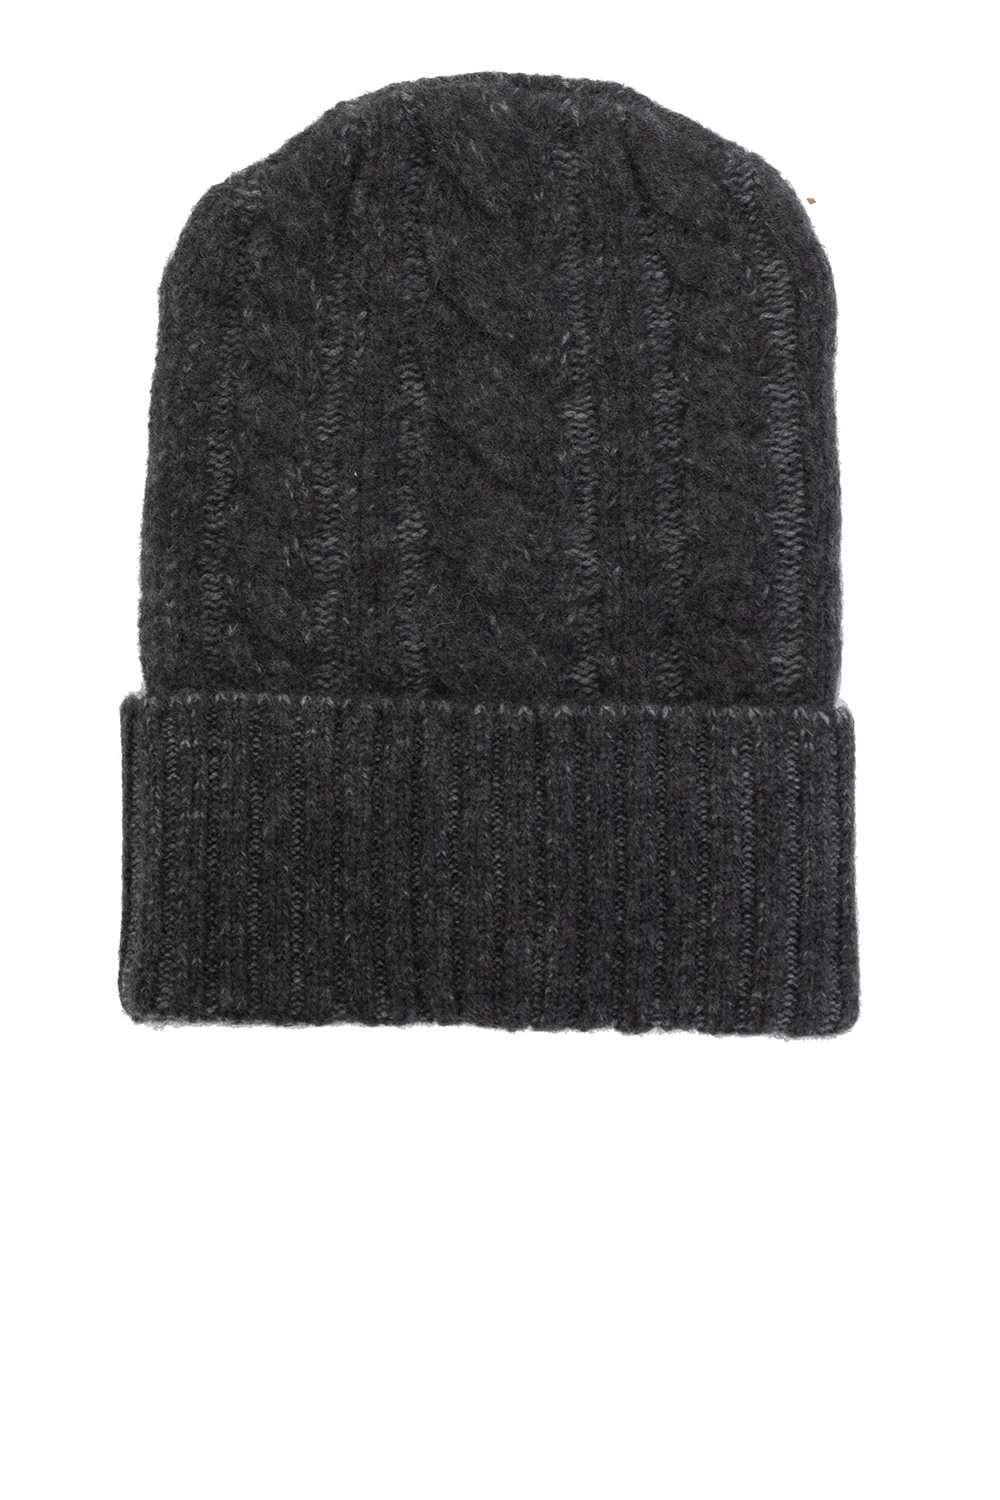 Shop Louis Vuitton Unisex Street Style Knit Hats (RIB FLOWER